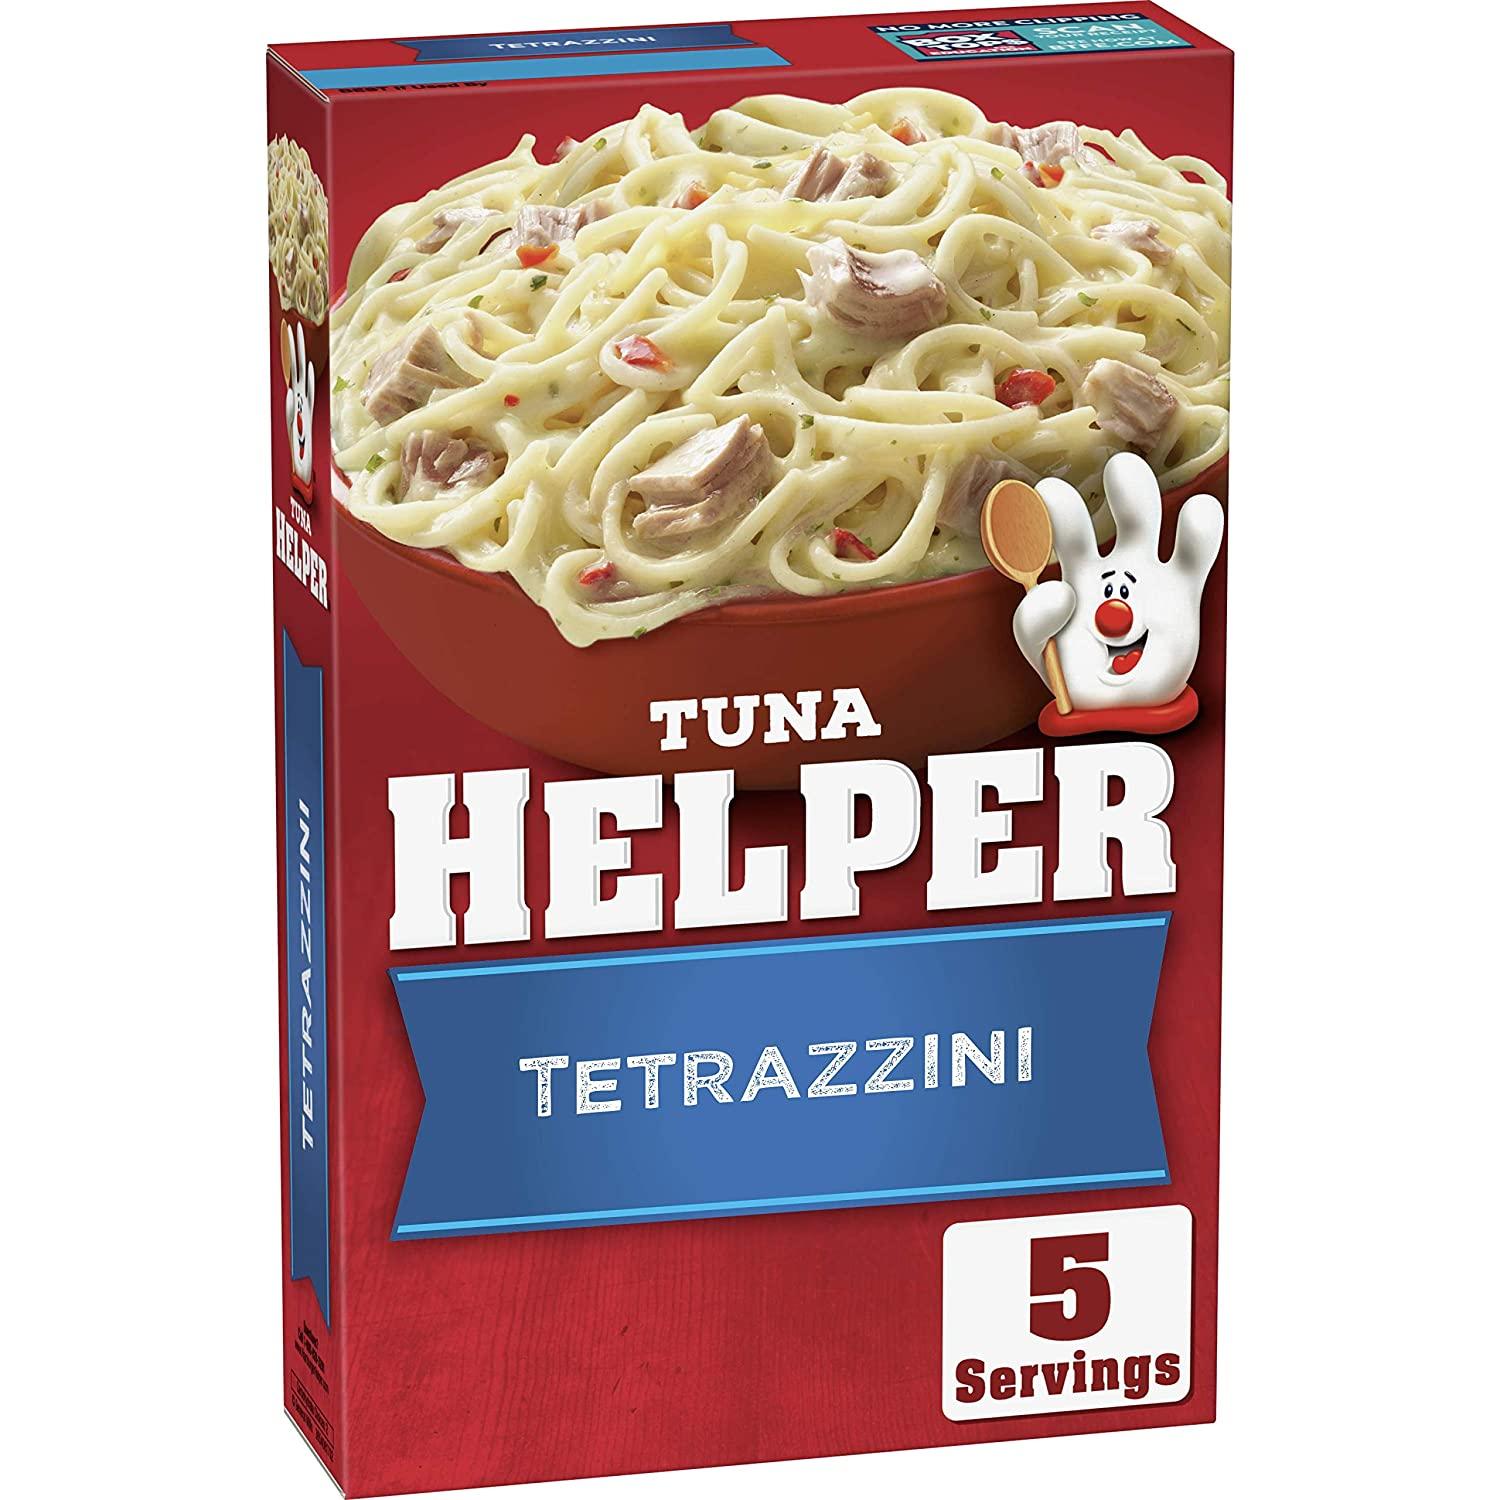 Betty Crocker Tuna Helper Tetrazzini for $1.43 Shipped